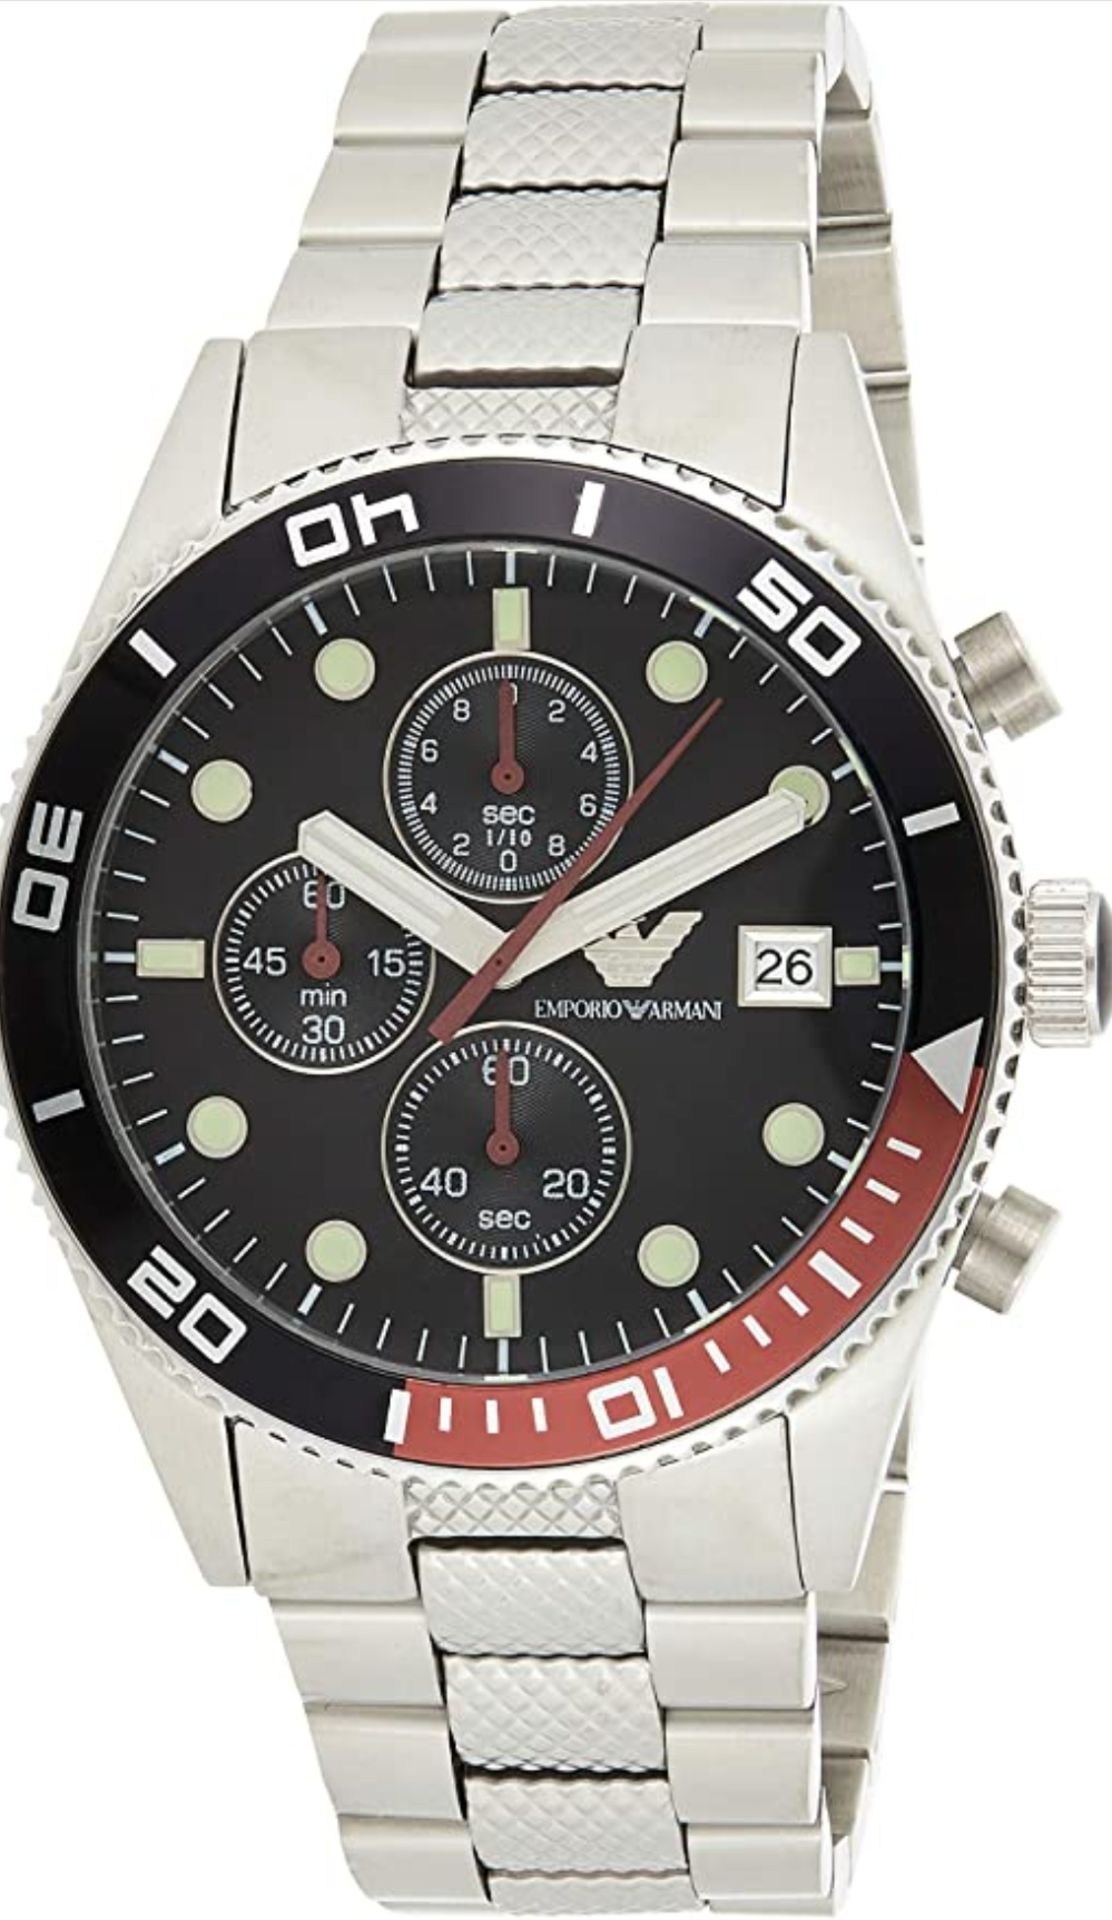 Emporio Armani AR5855 Men's Black Dial Silver Tone Bracelet Quartz Chronograph Watch - Image 2 of 8